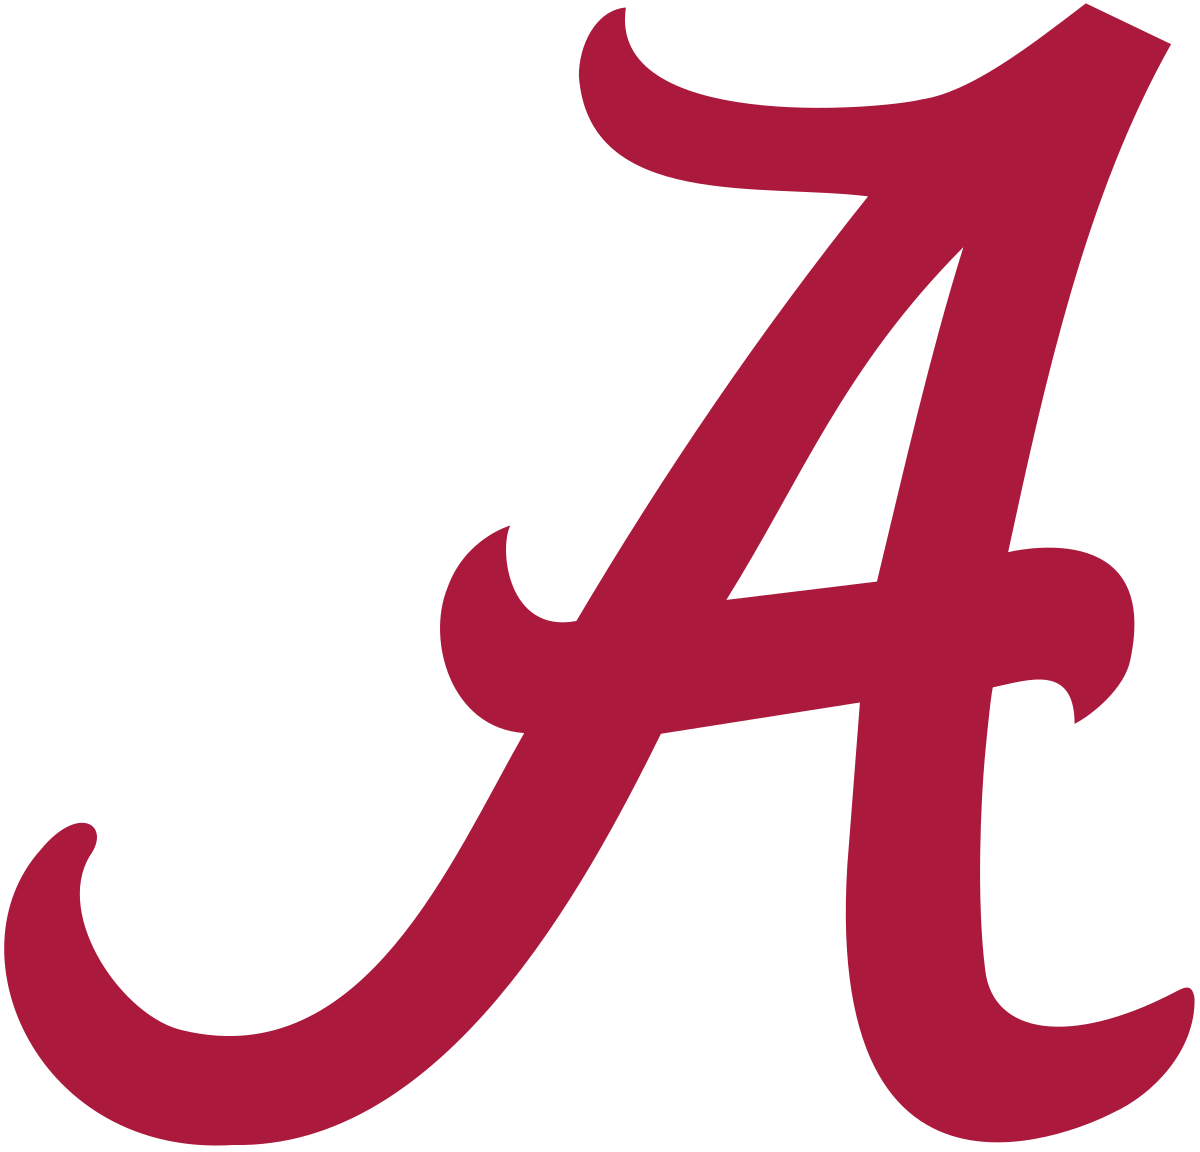 2018 Tide Logo - 2018 Alabama Crimson Tide football team